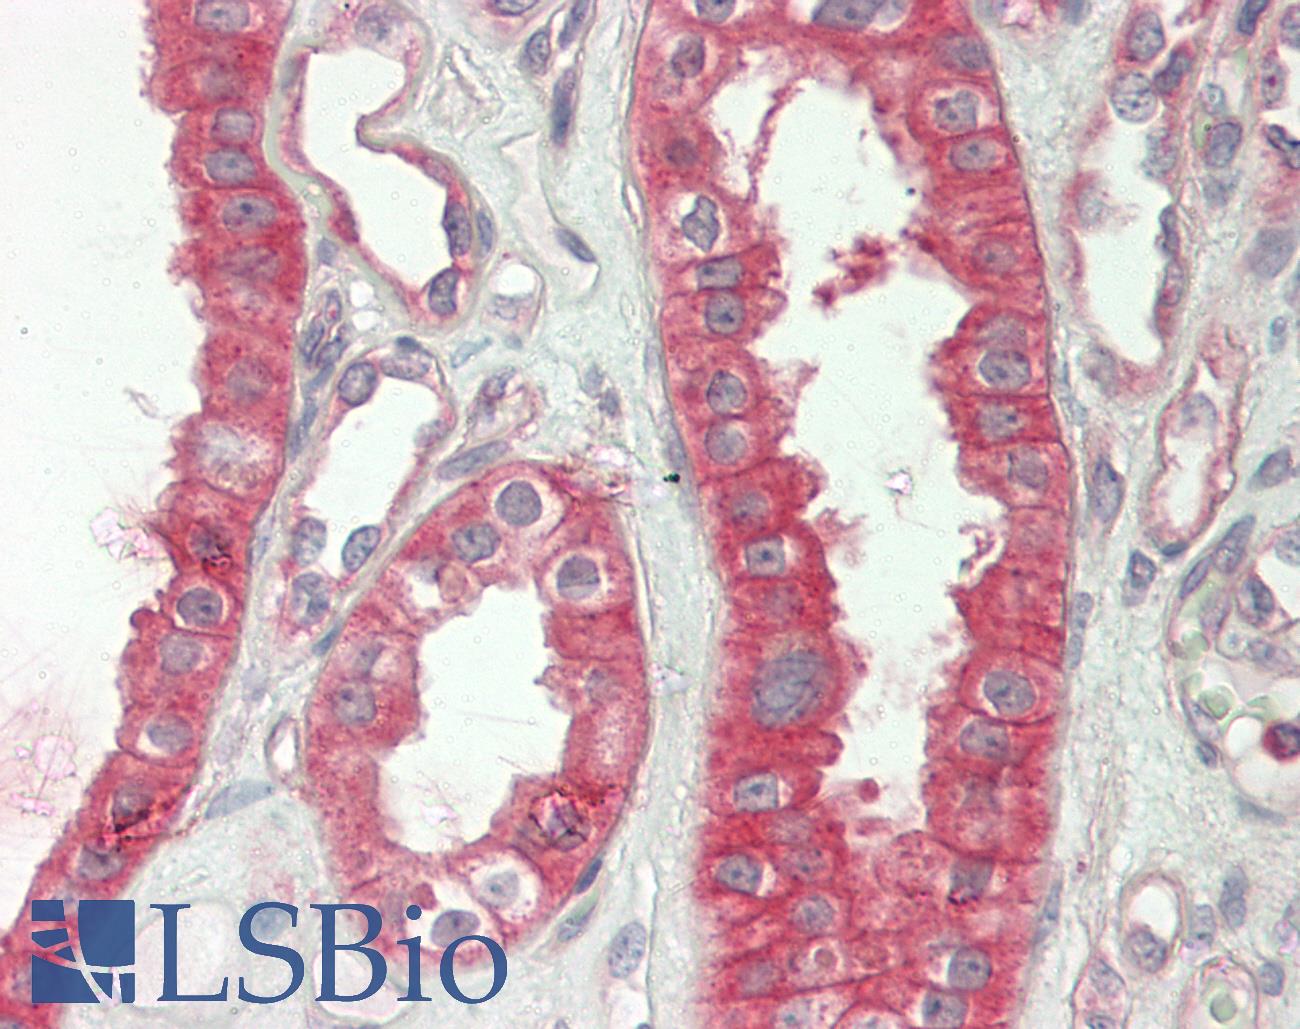 c-CBL Antibody - Human Kidney: Formalin-Fixed, Paraffin-Embedded (FFPE)